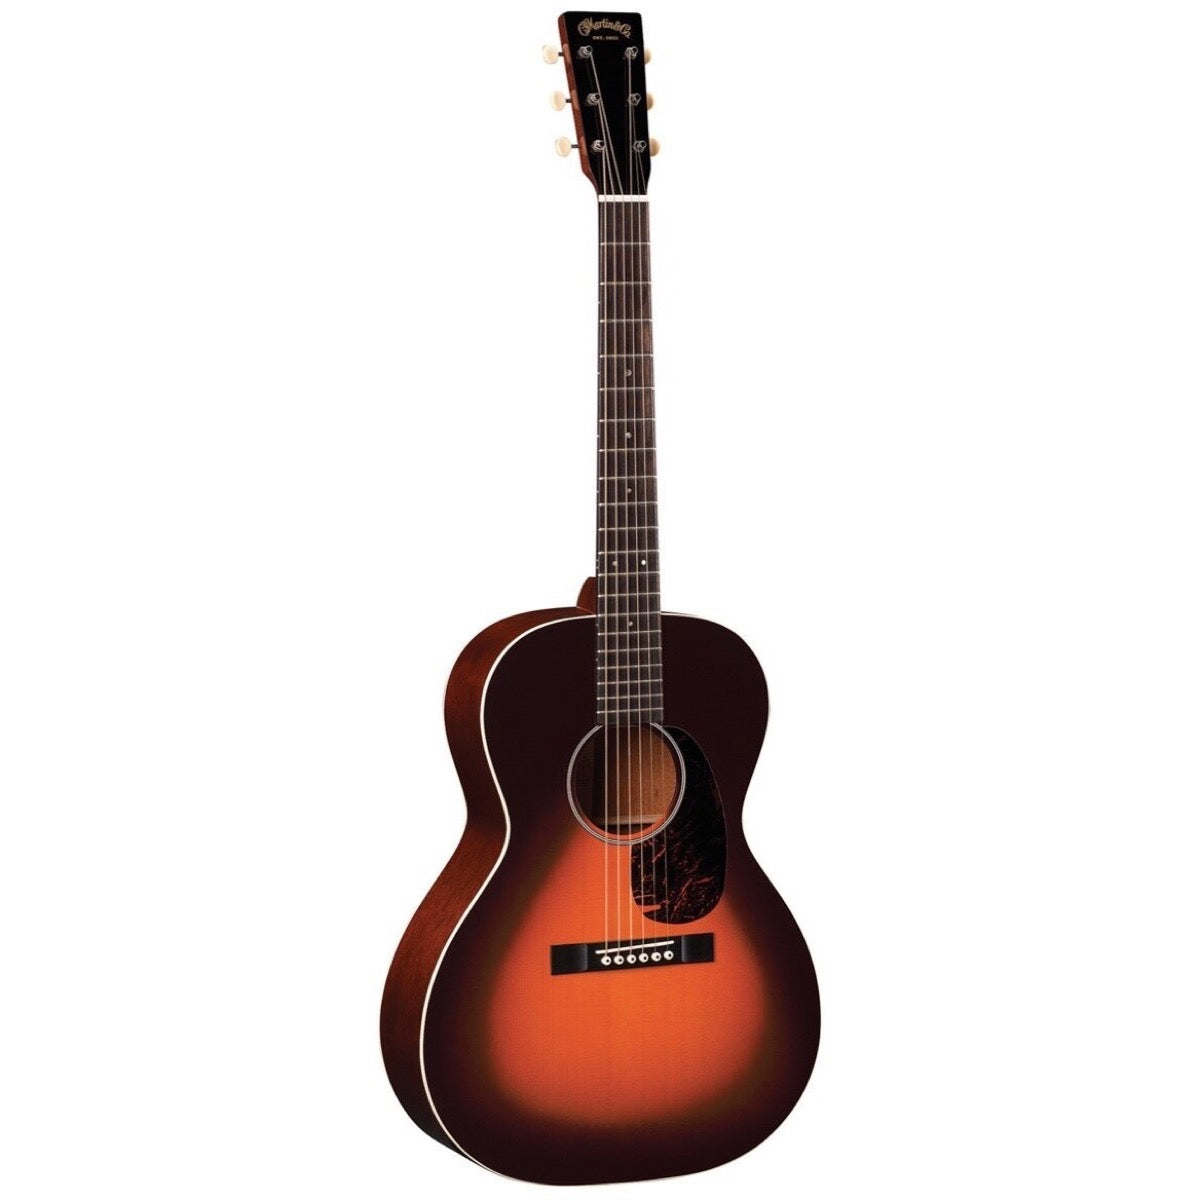 Martin CEO7 Sloped Shoulder 00 14-Fret Acoustic Guitar (with Case), Autumn Sunset Burst